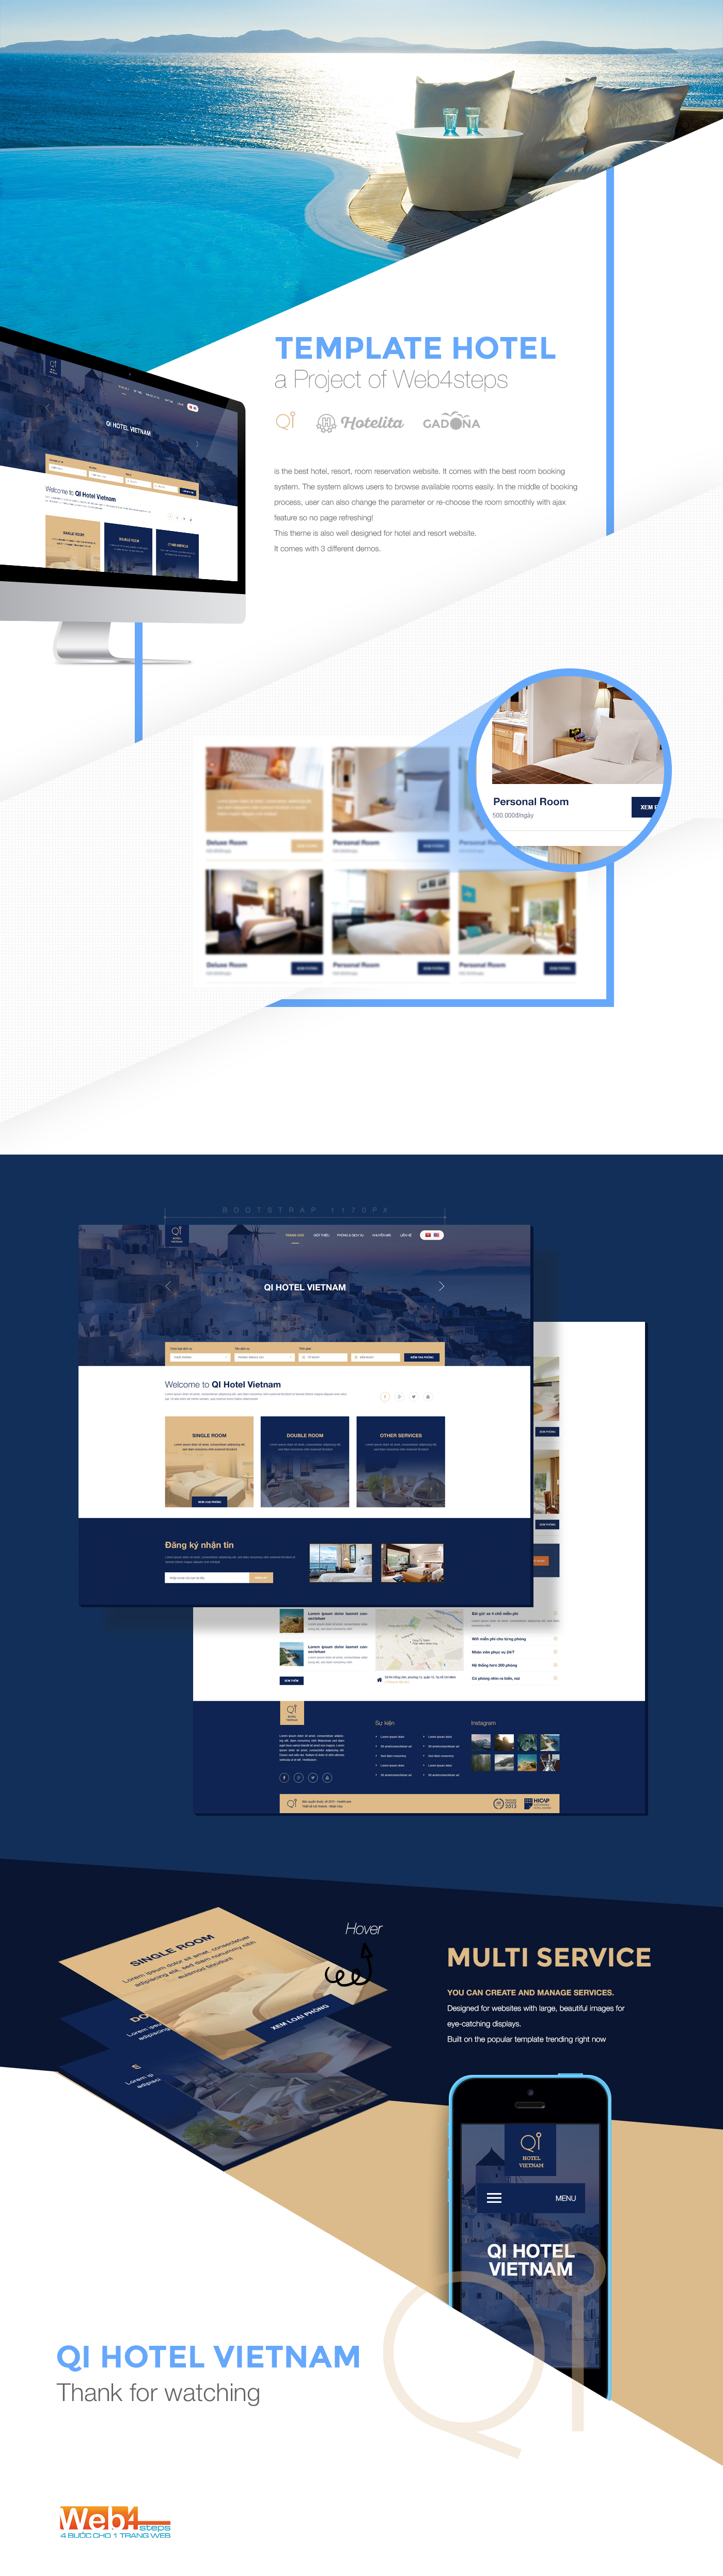 UI ux design template Theme hote resort Room Reservation Website Booking Room